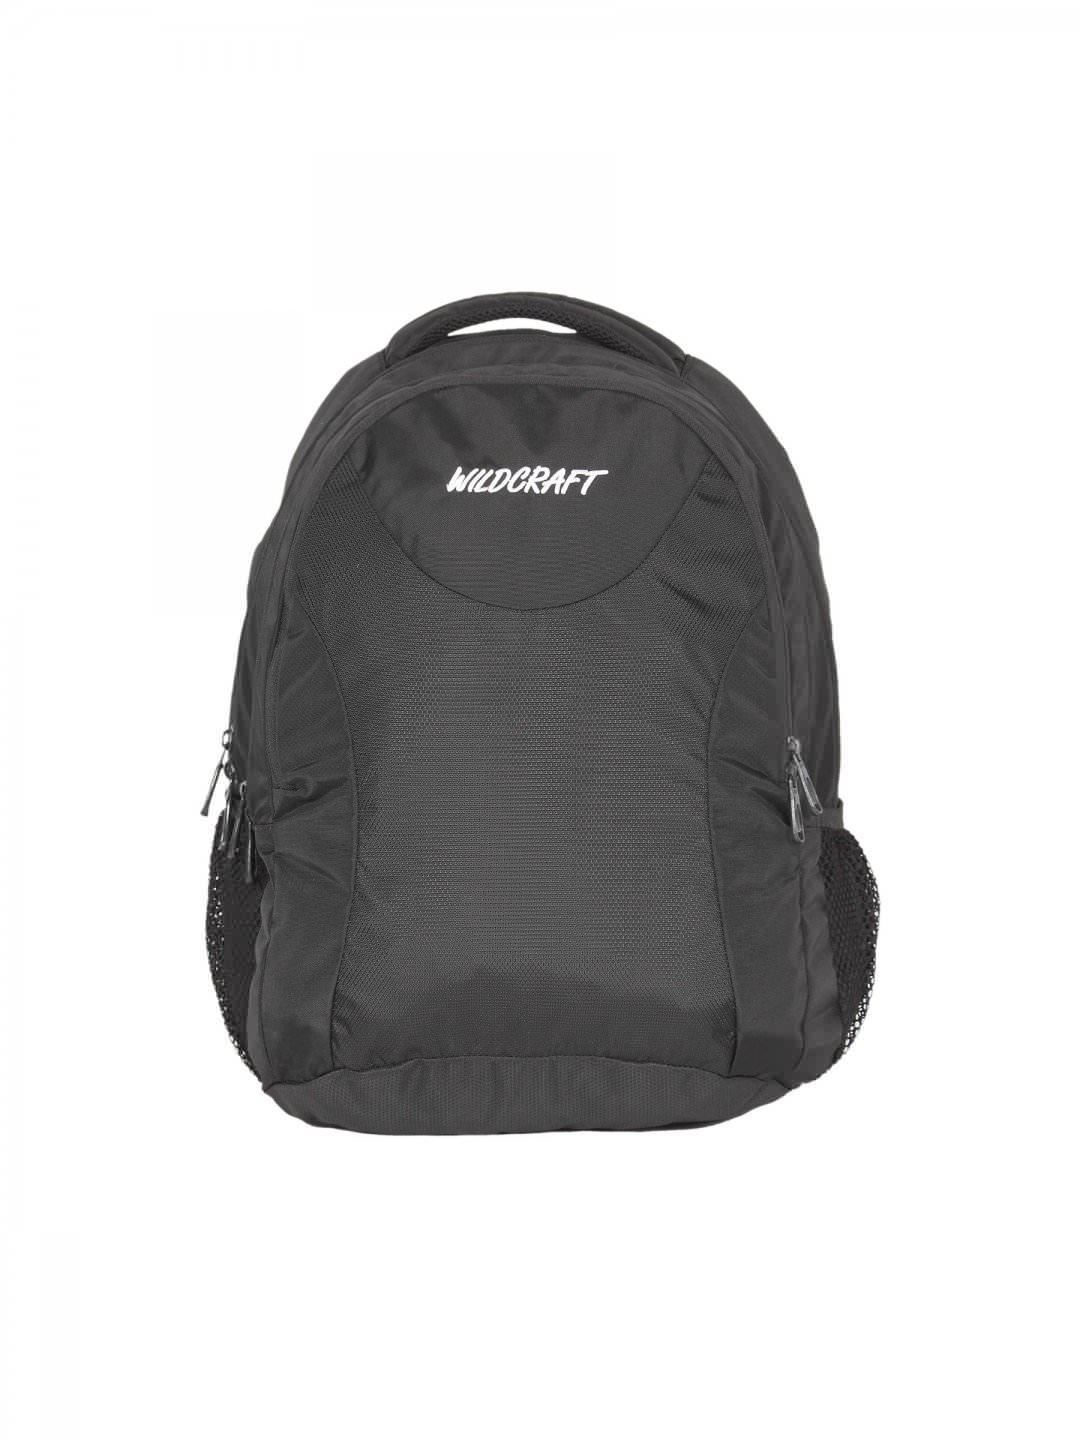 Wildcraft Unisex Corporate Black Backpack